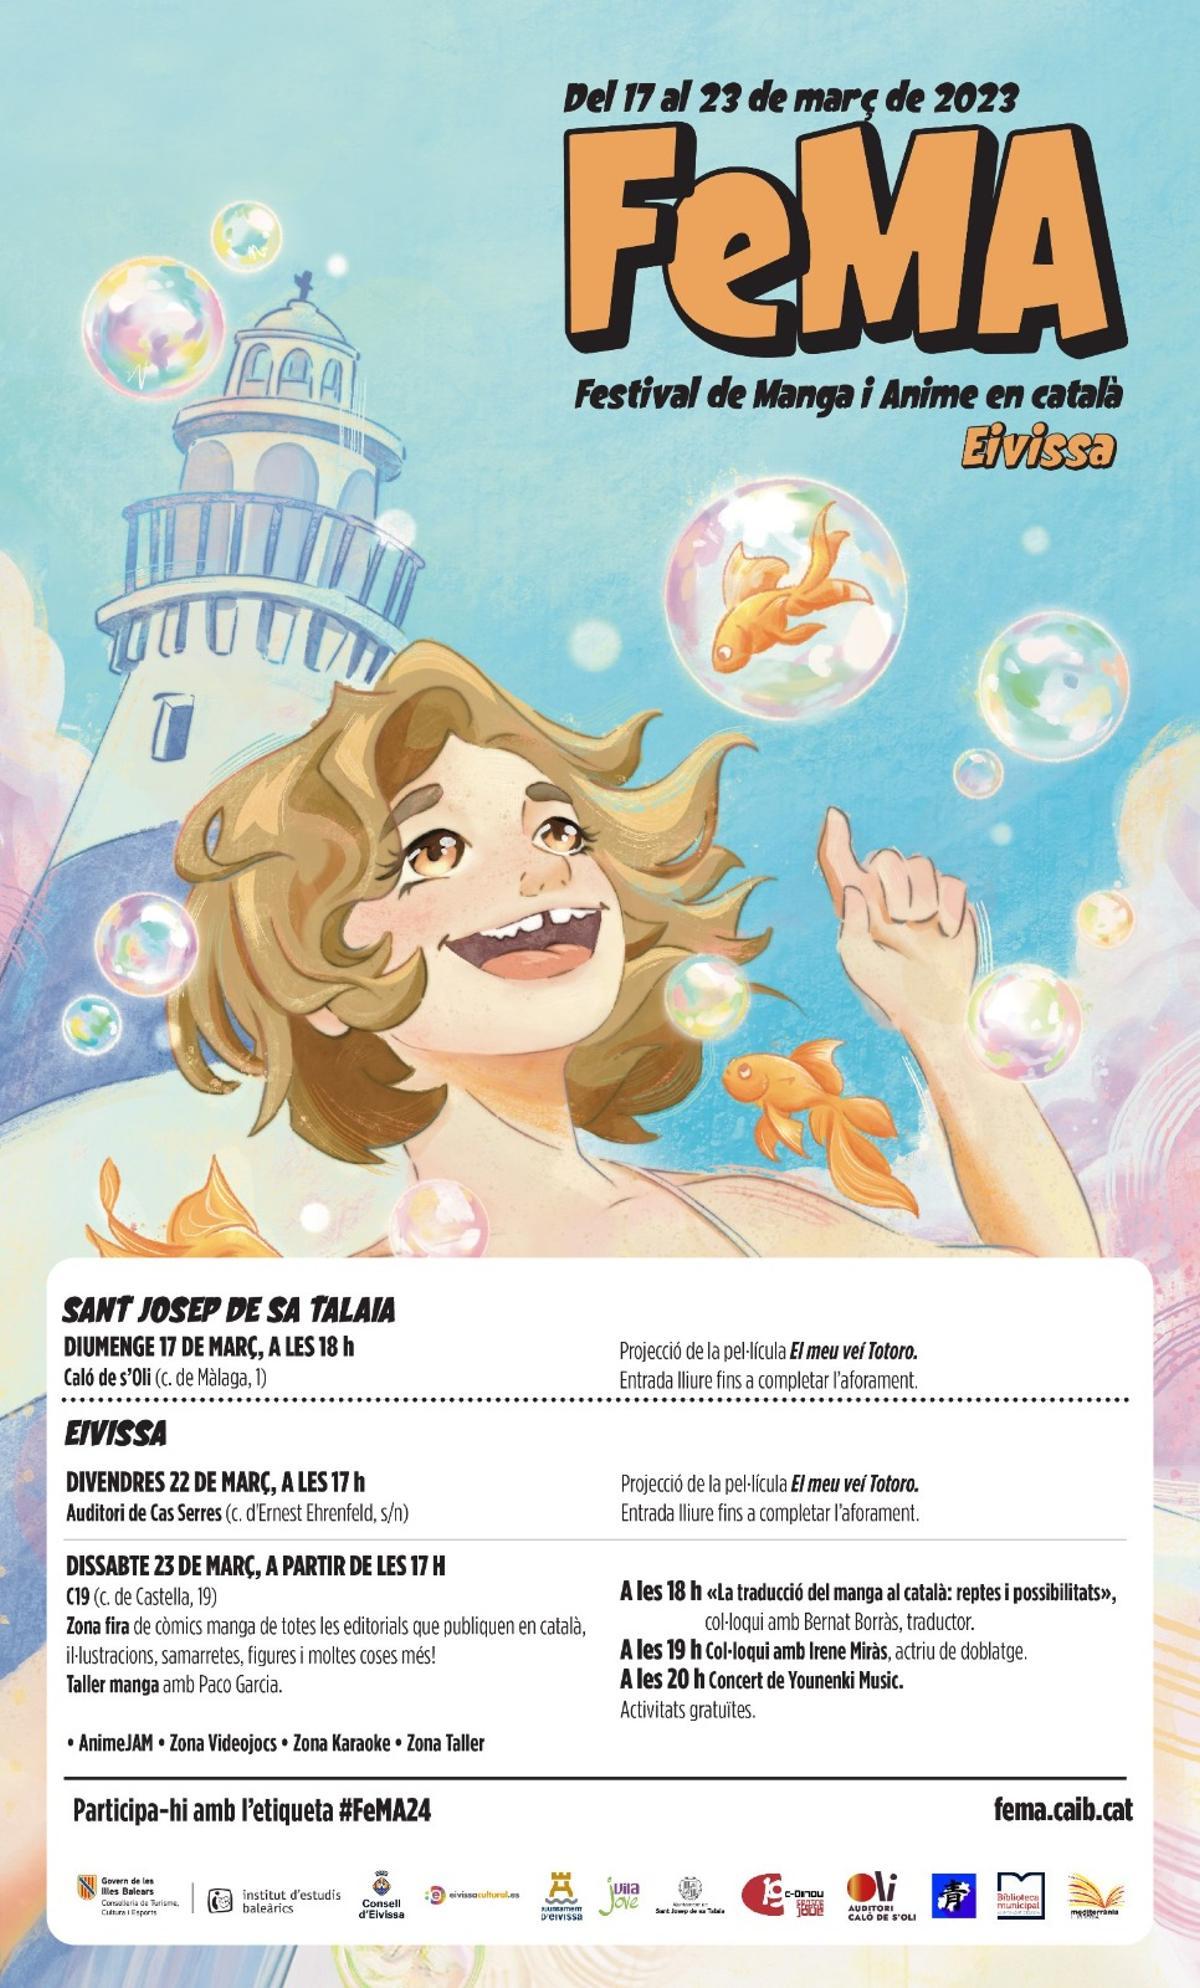 Programa del 'Festival de Manga i Anime en català' en Ibiza